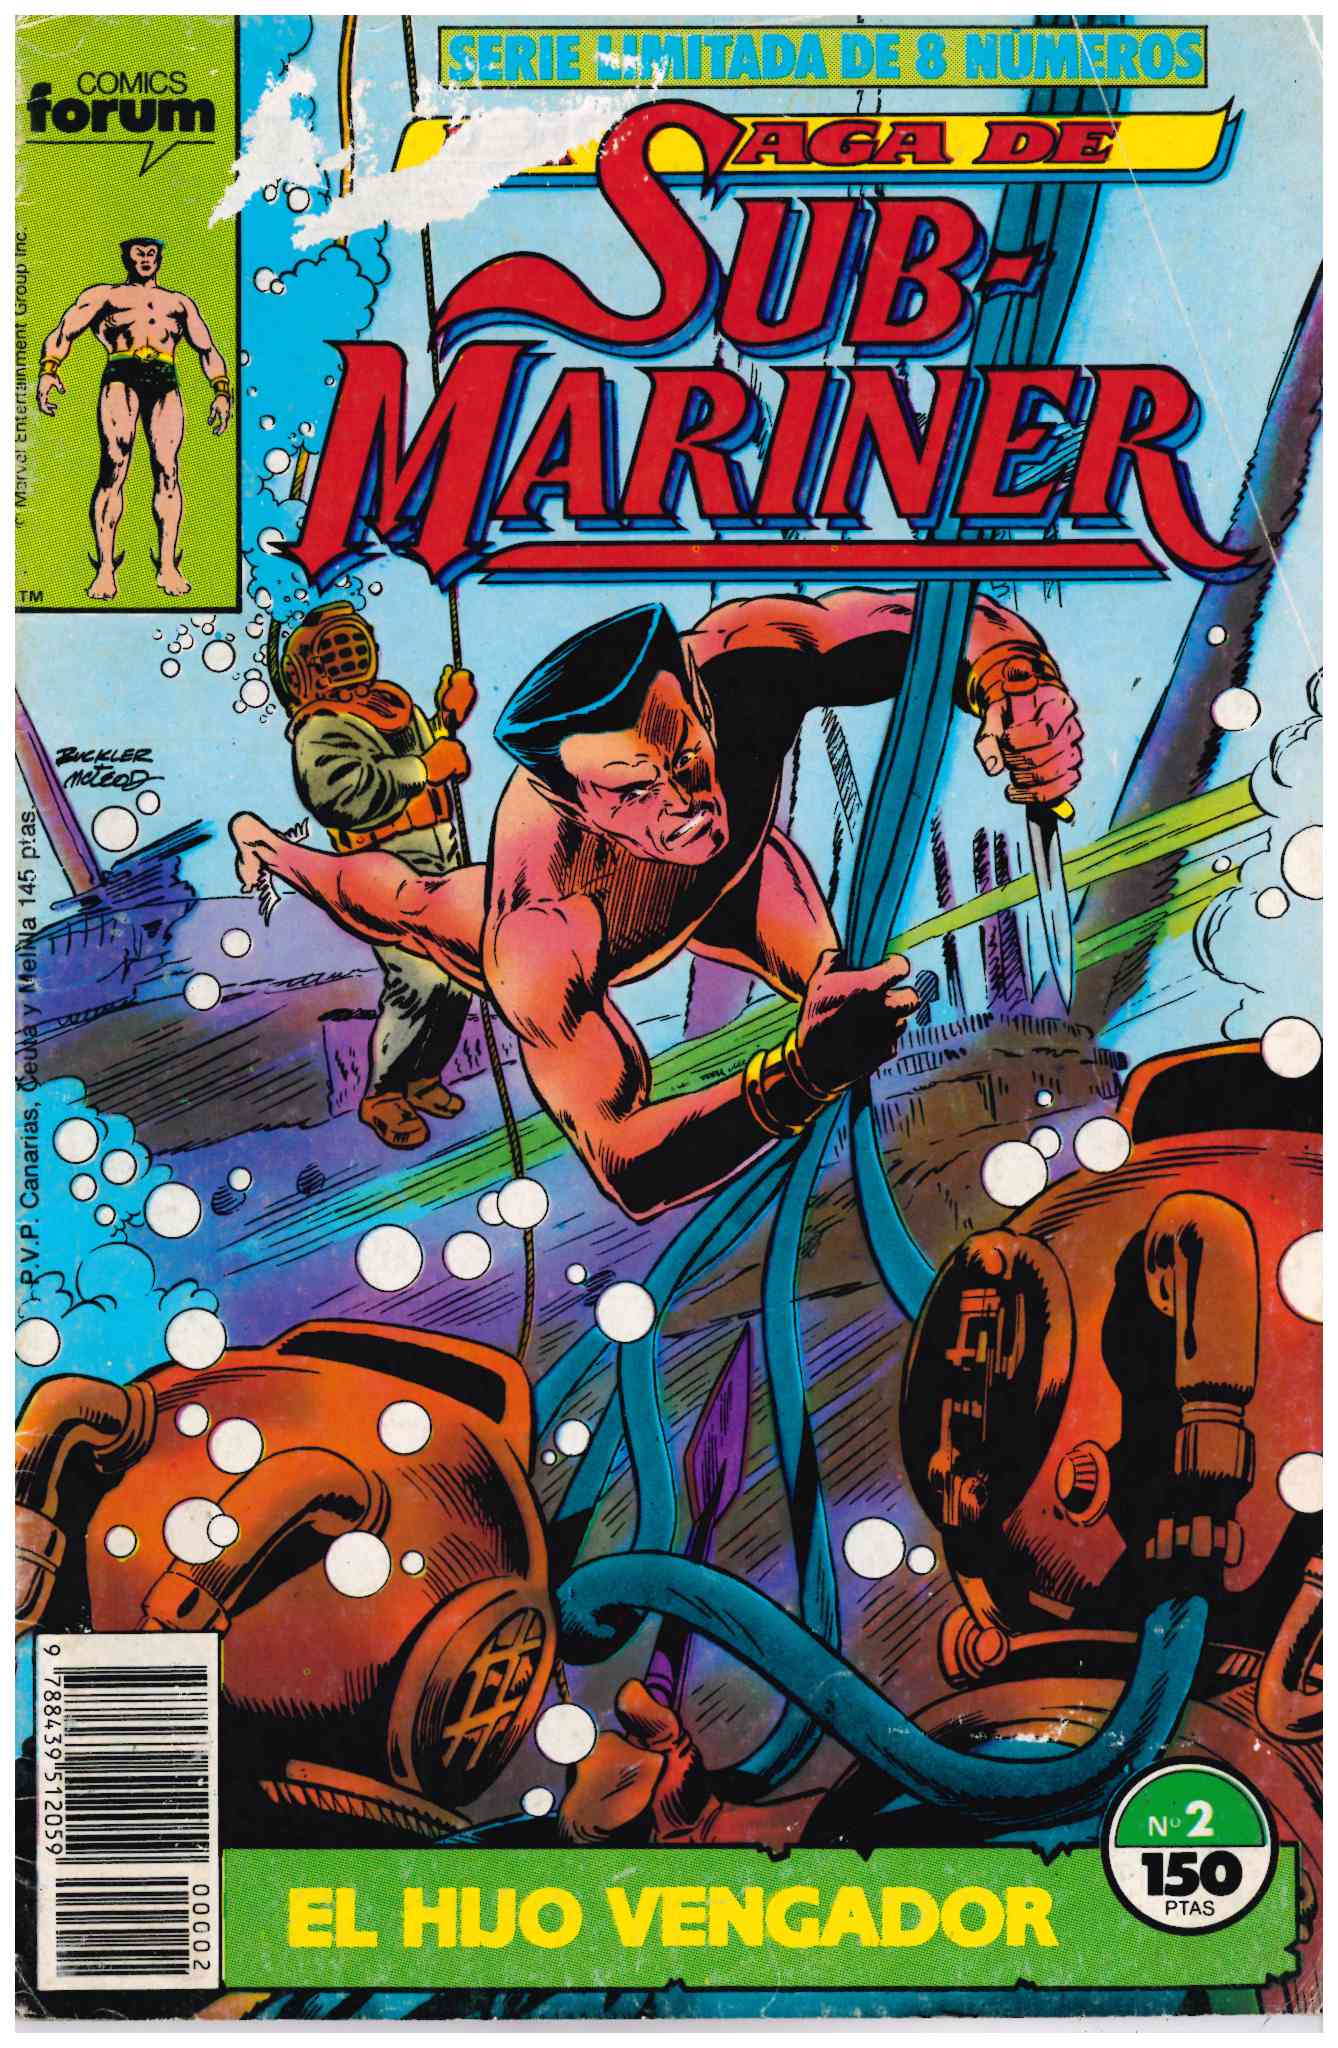 La Saga de Sub-Mariner (Namor). Forum 1989. Nº 2